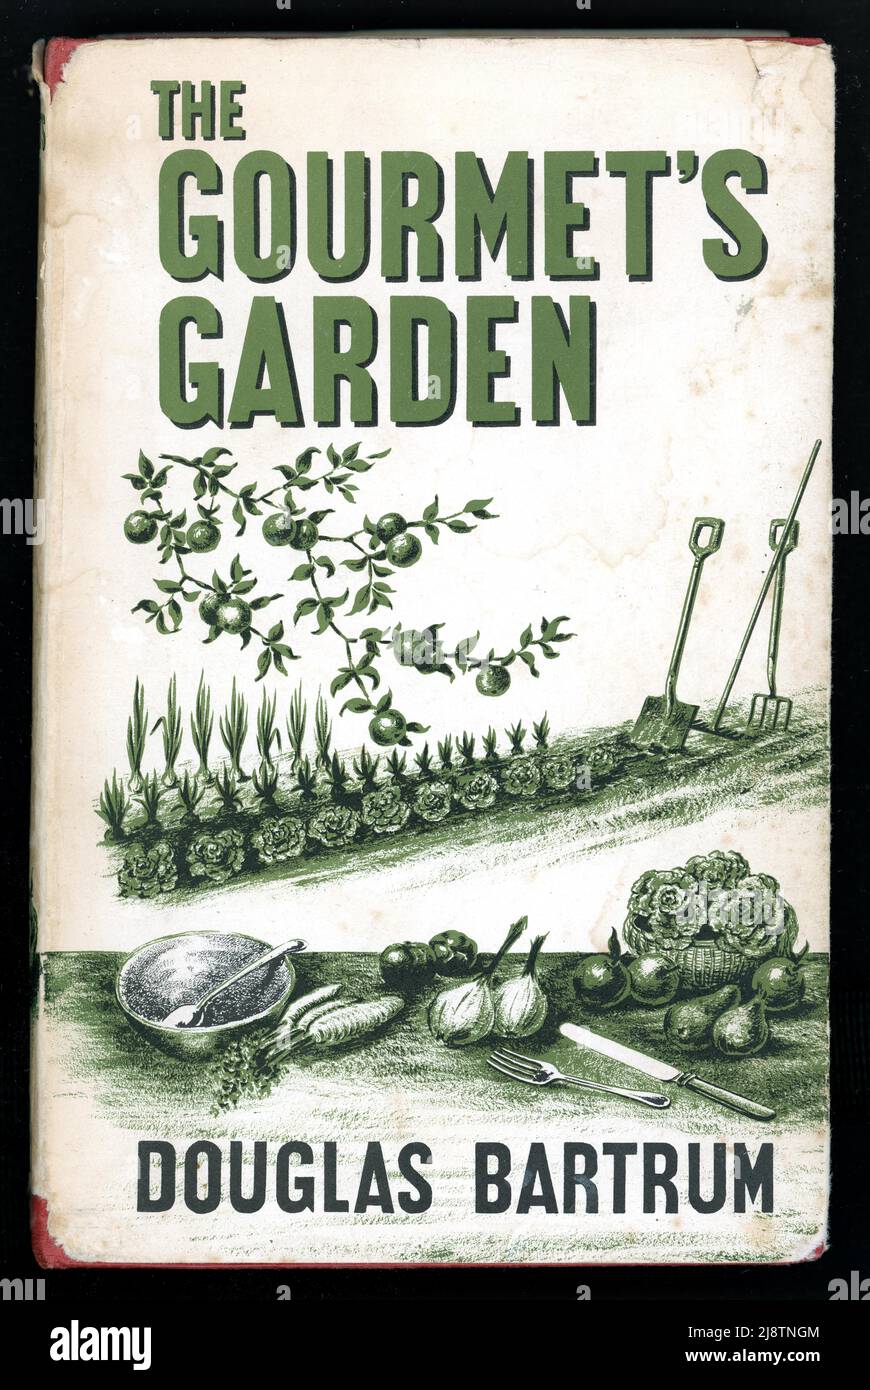 Original copy of The Gourmet's Garden by Douglas Bartram, Garden Book Club Edition, 1964 121 Charing Cross Road, London, U.K. Stock Photo